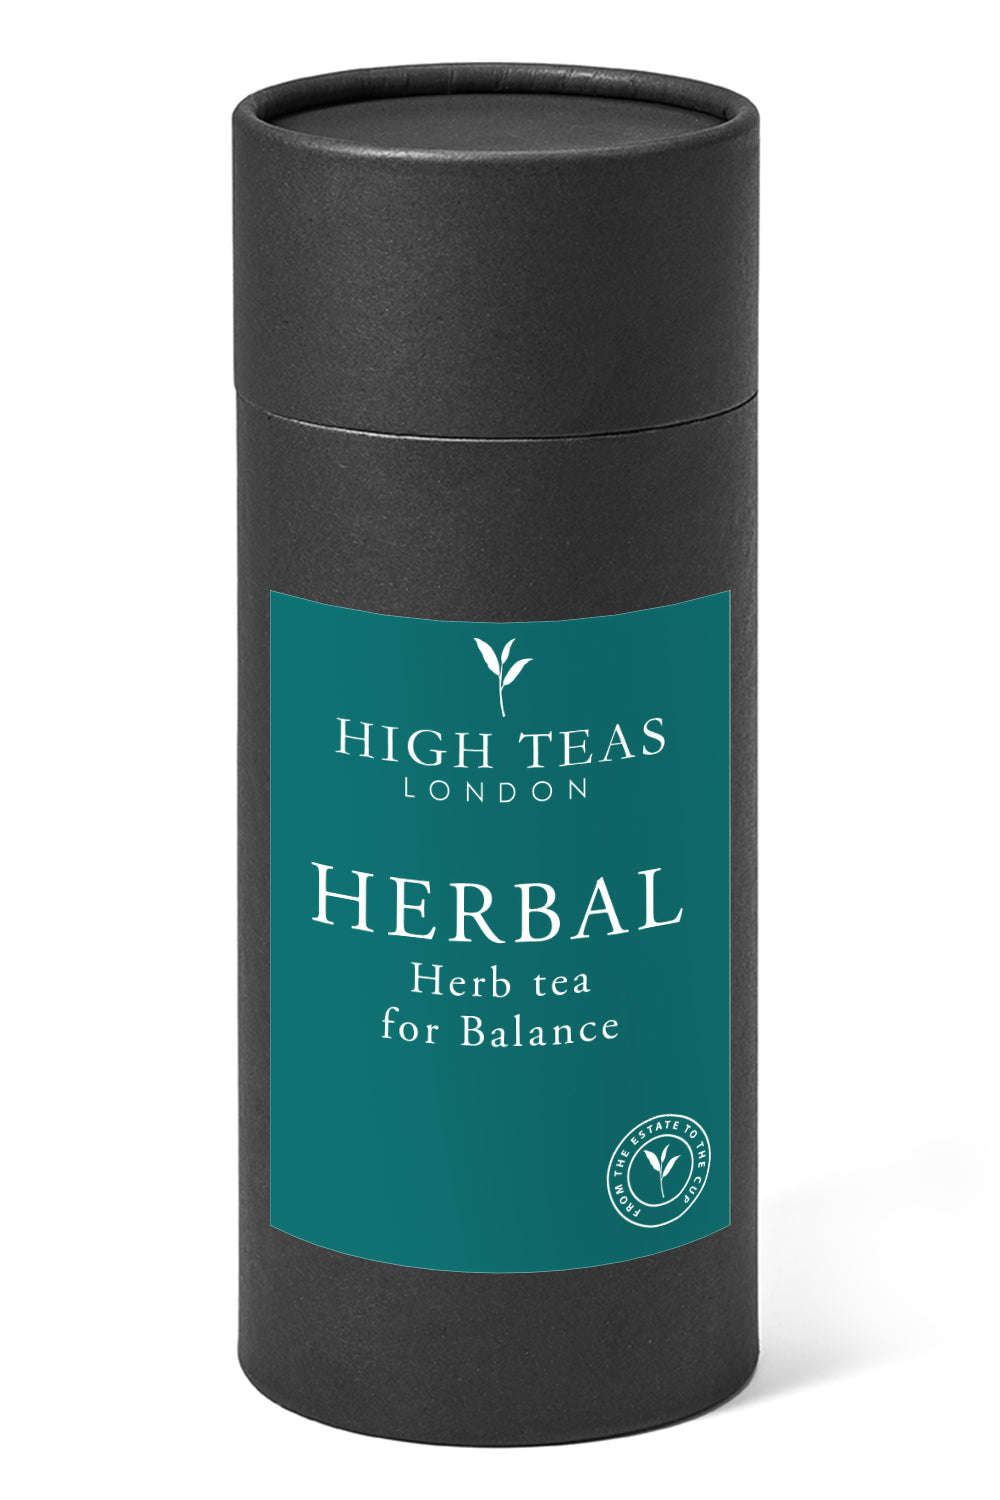 Herb tea for Balance- Pitta supports the Dosha "Pitta"-150g gift-Loose Leaf Tea-High Teas